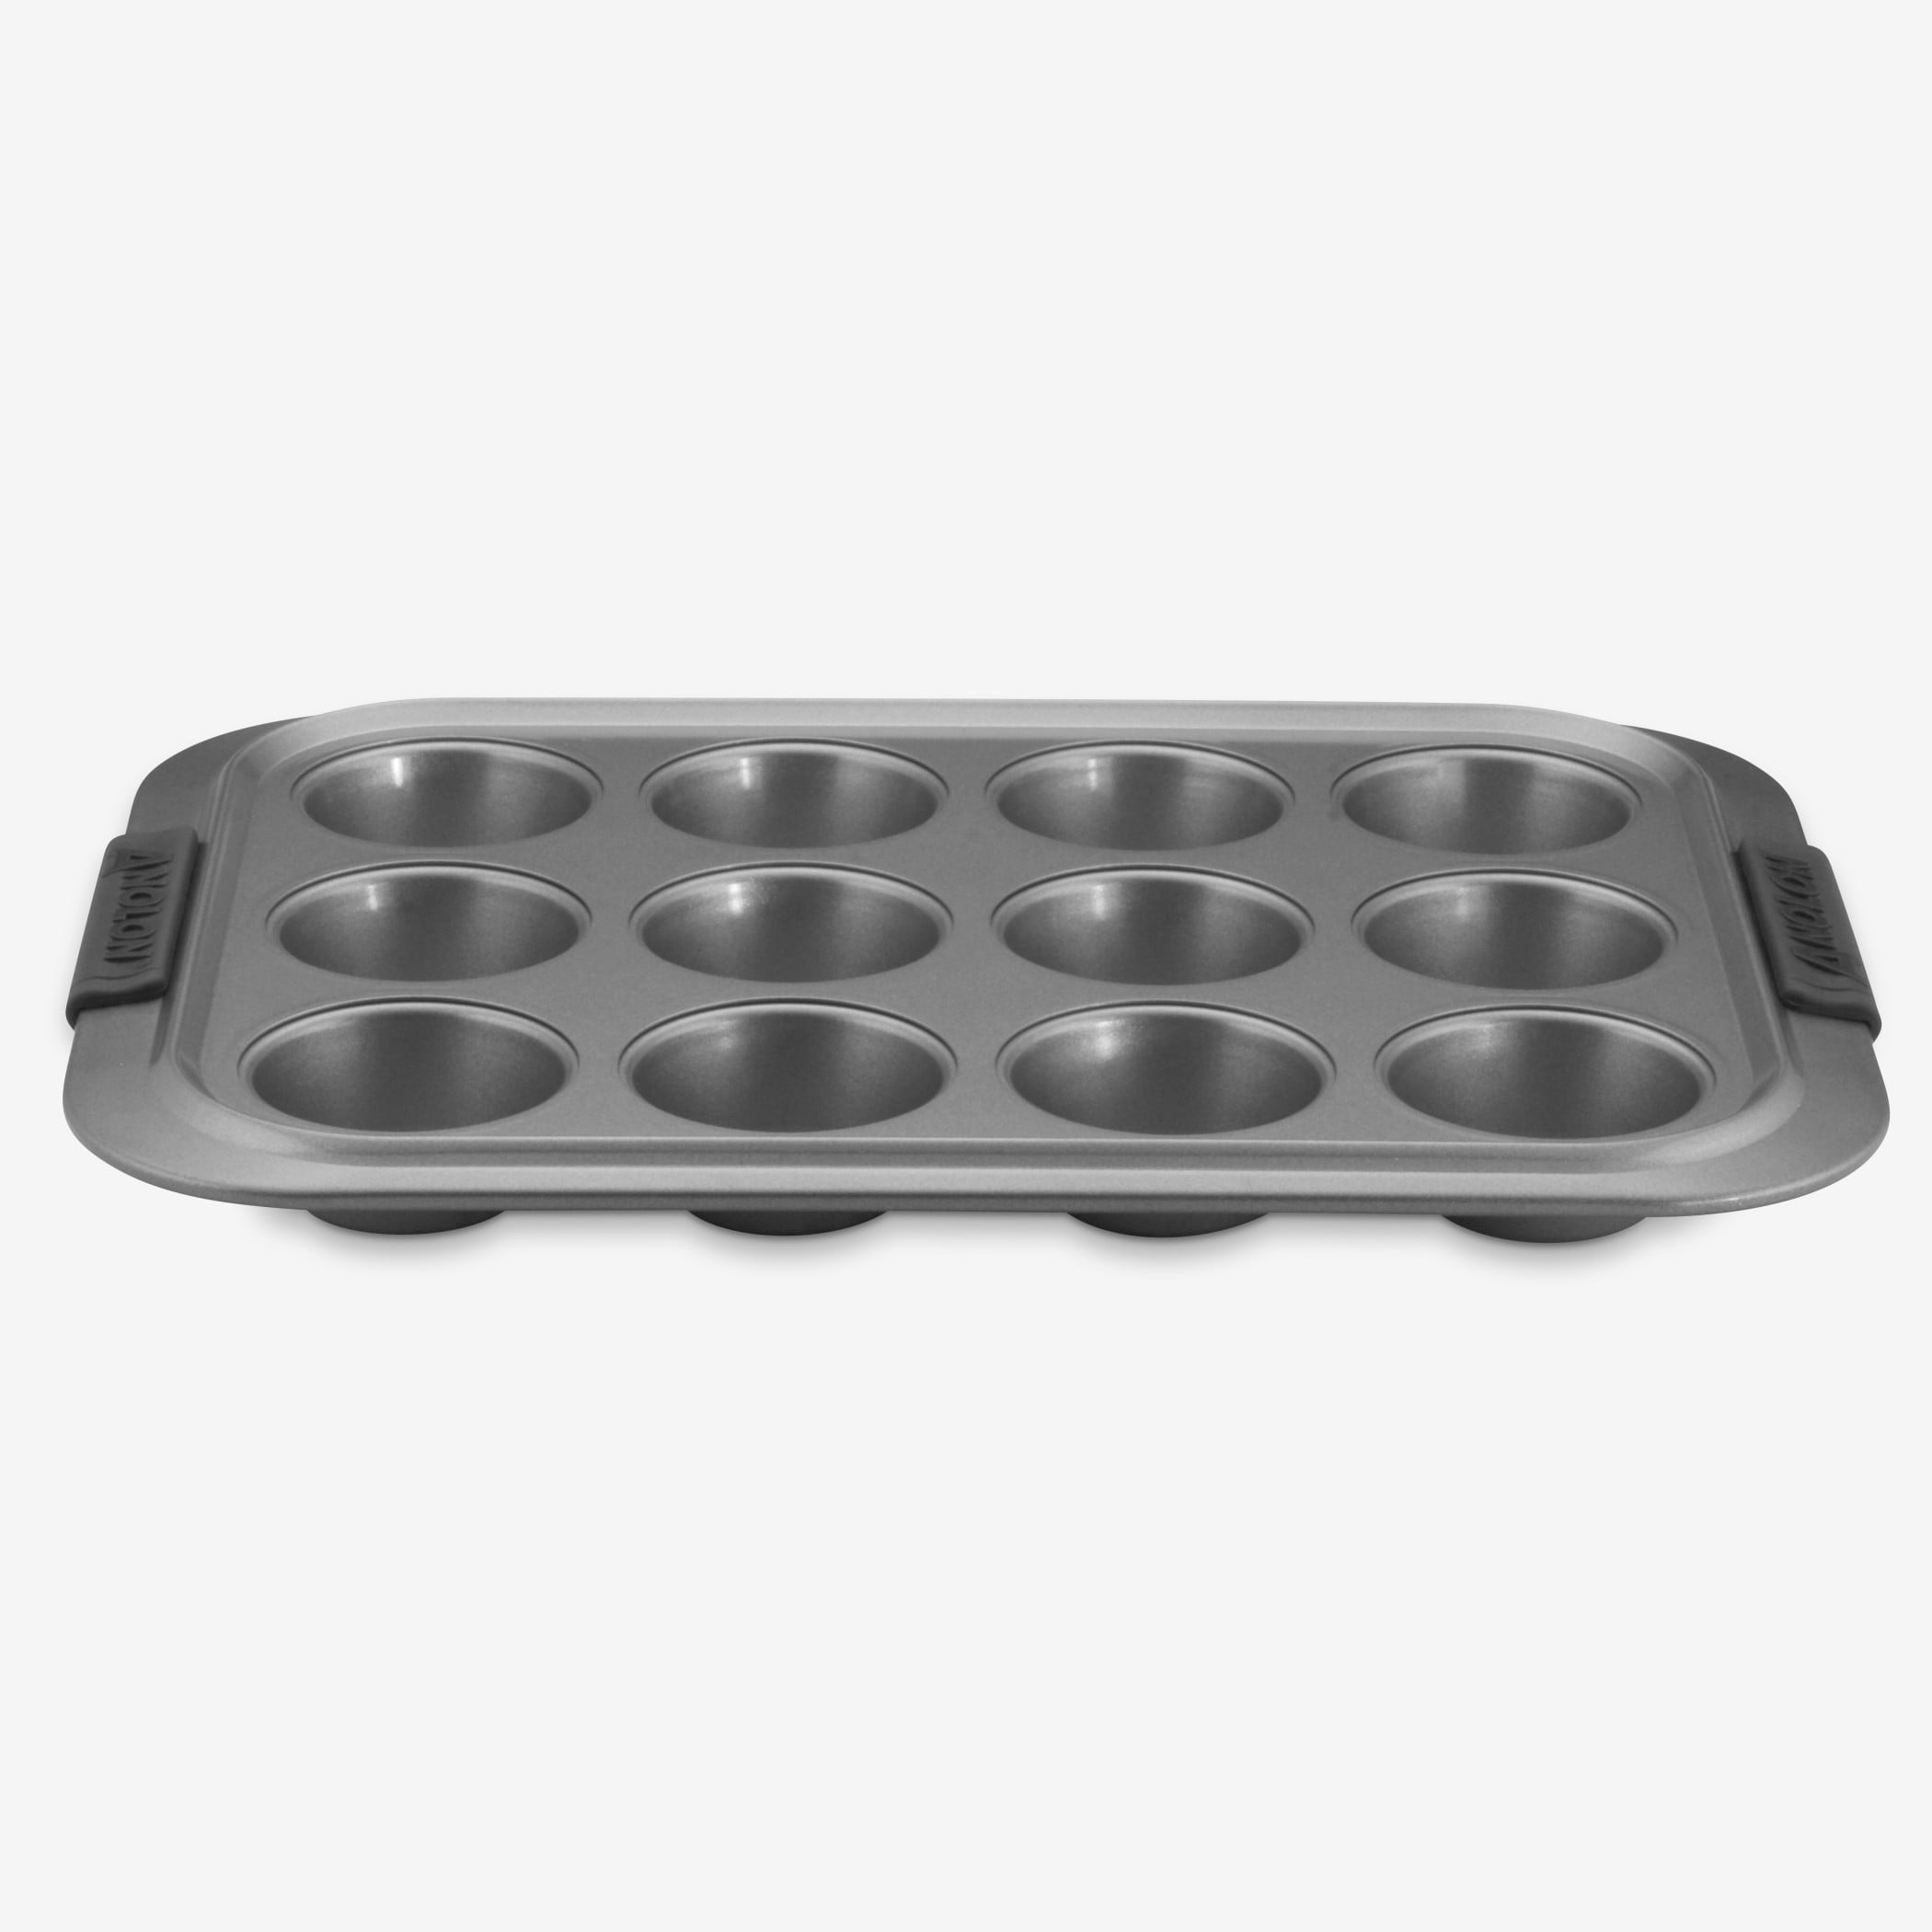 Basics Nonstick Round Muffin Baking Pan, 12 Cups, Set of 2, Gray,  13.9x10.55x1.22